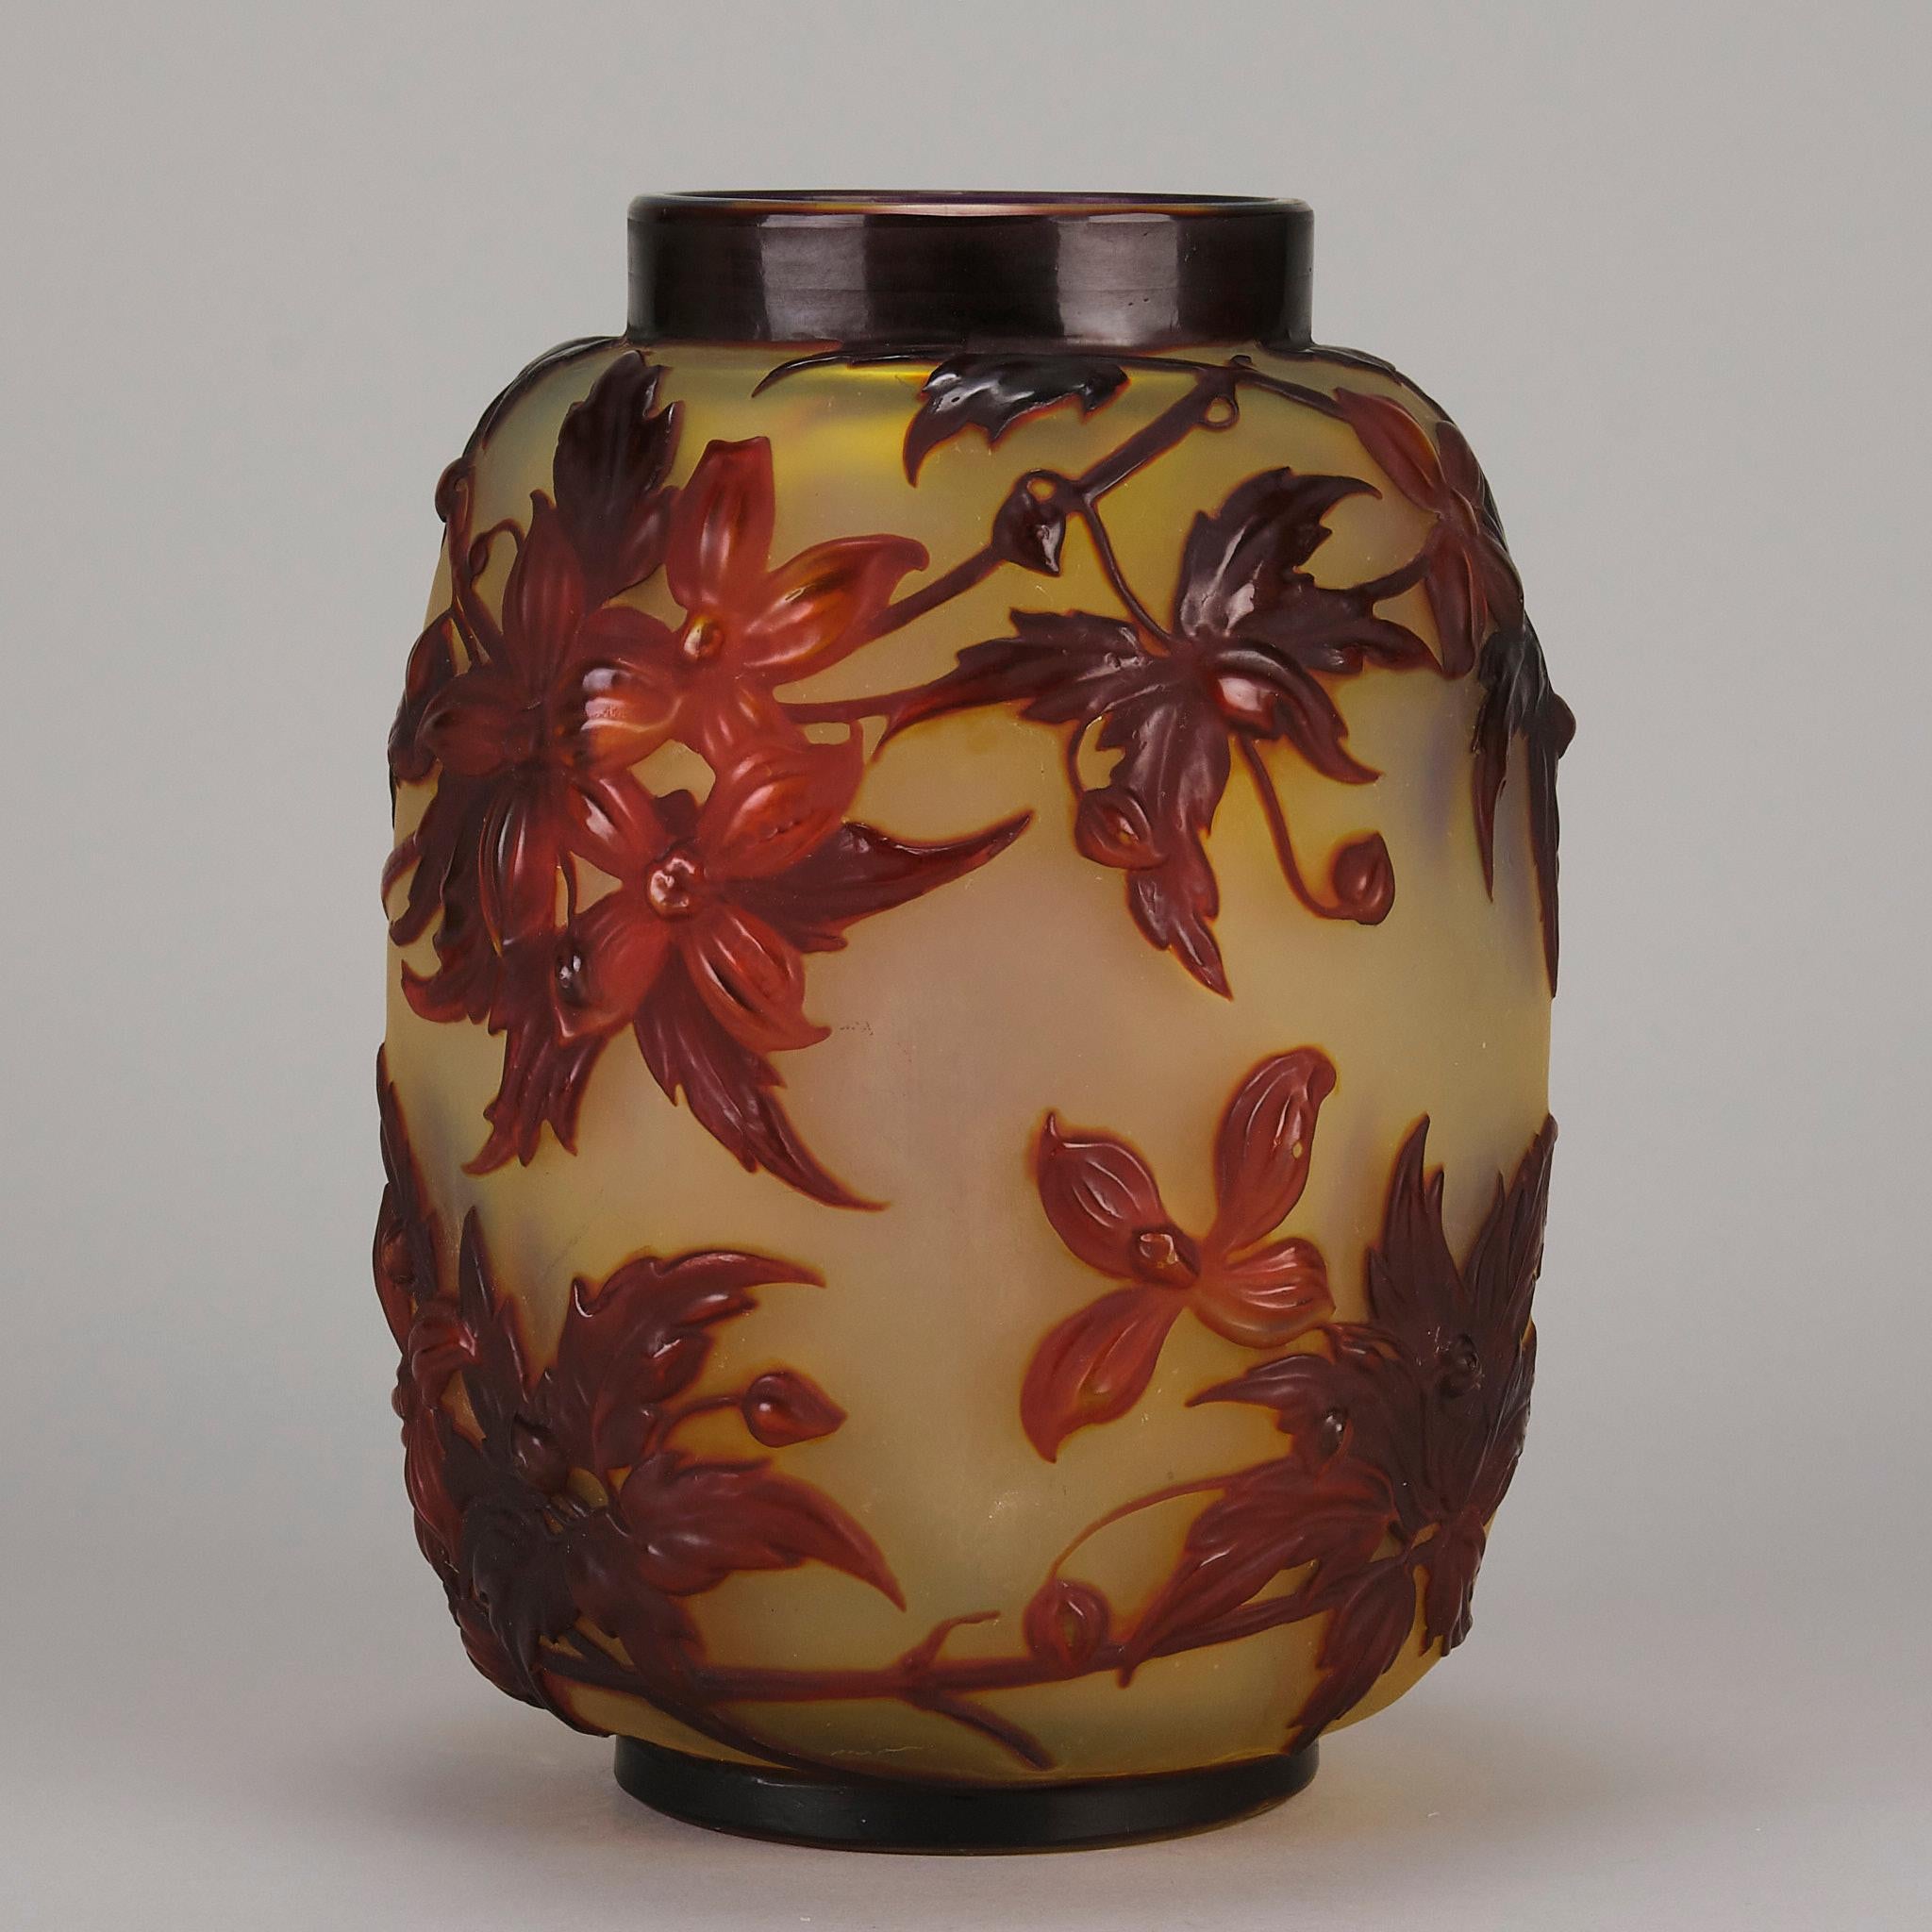 Rare Early 20th Century Art Nouveau Vase 